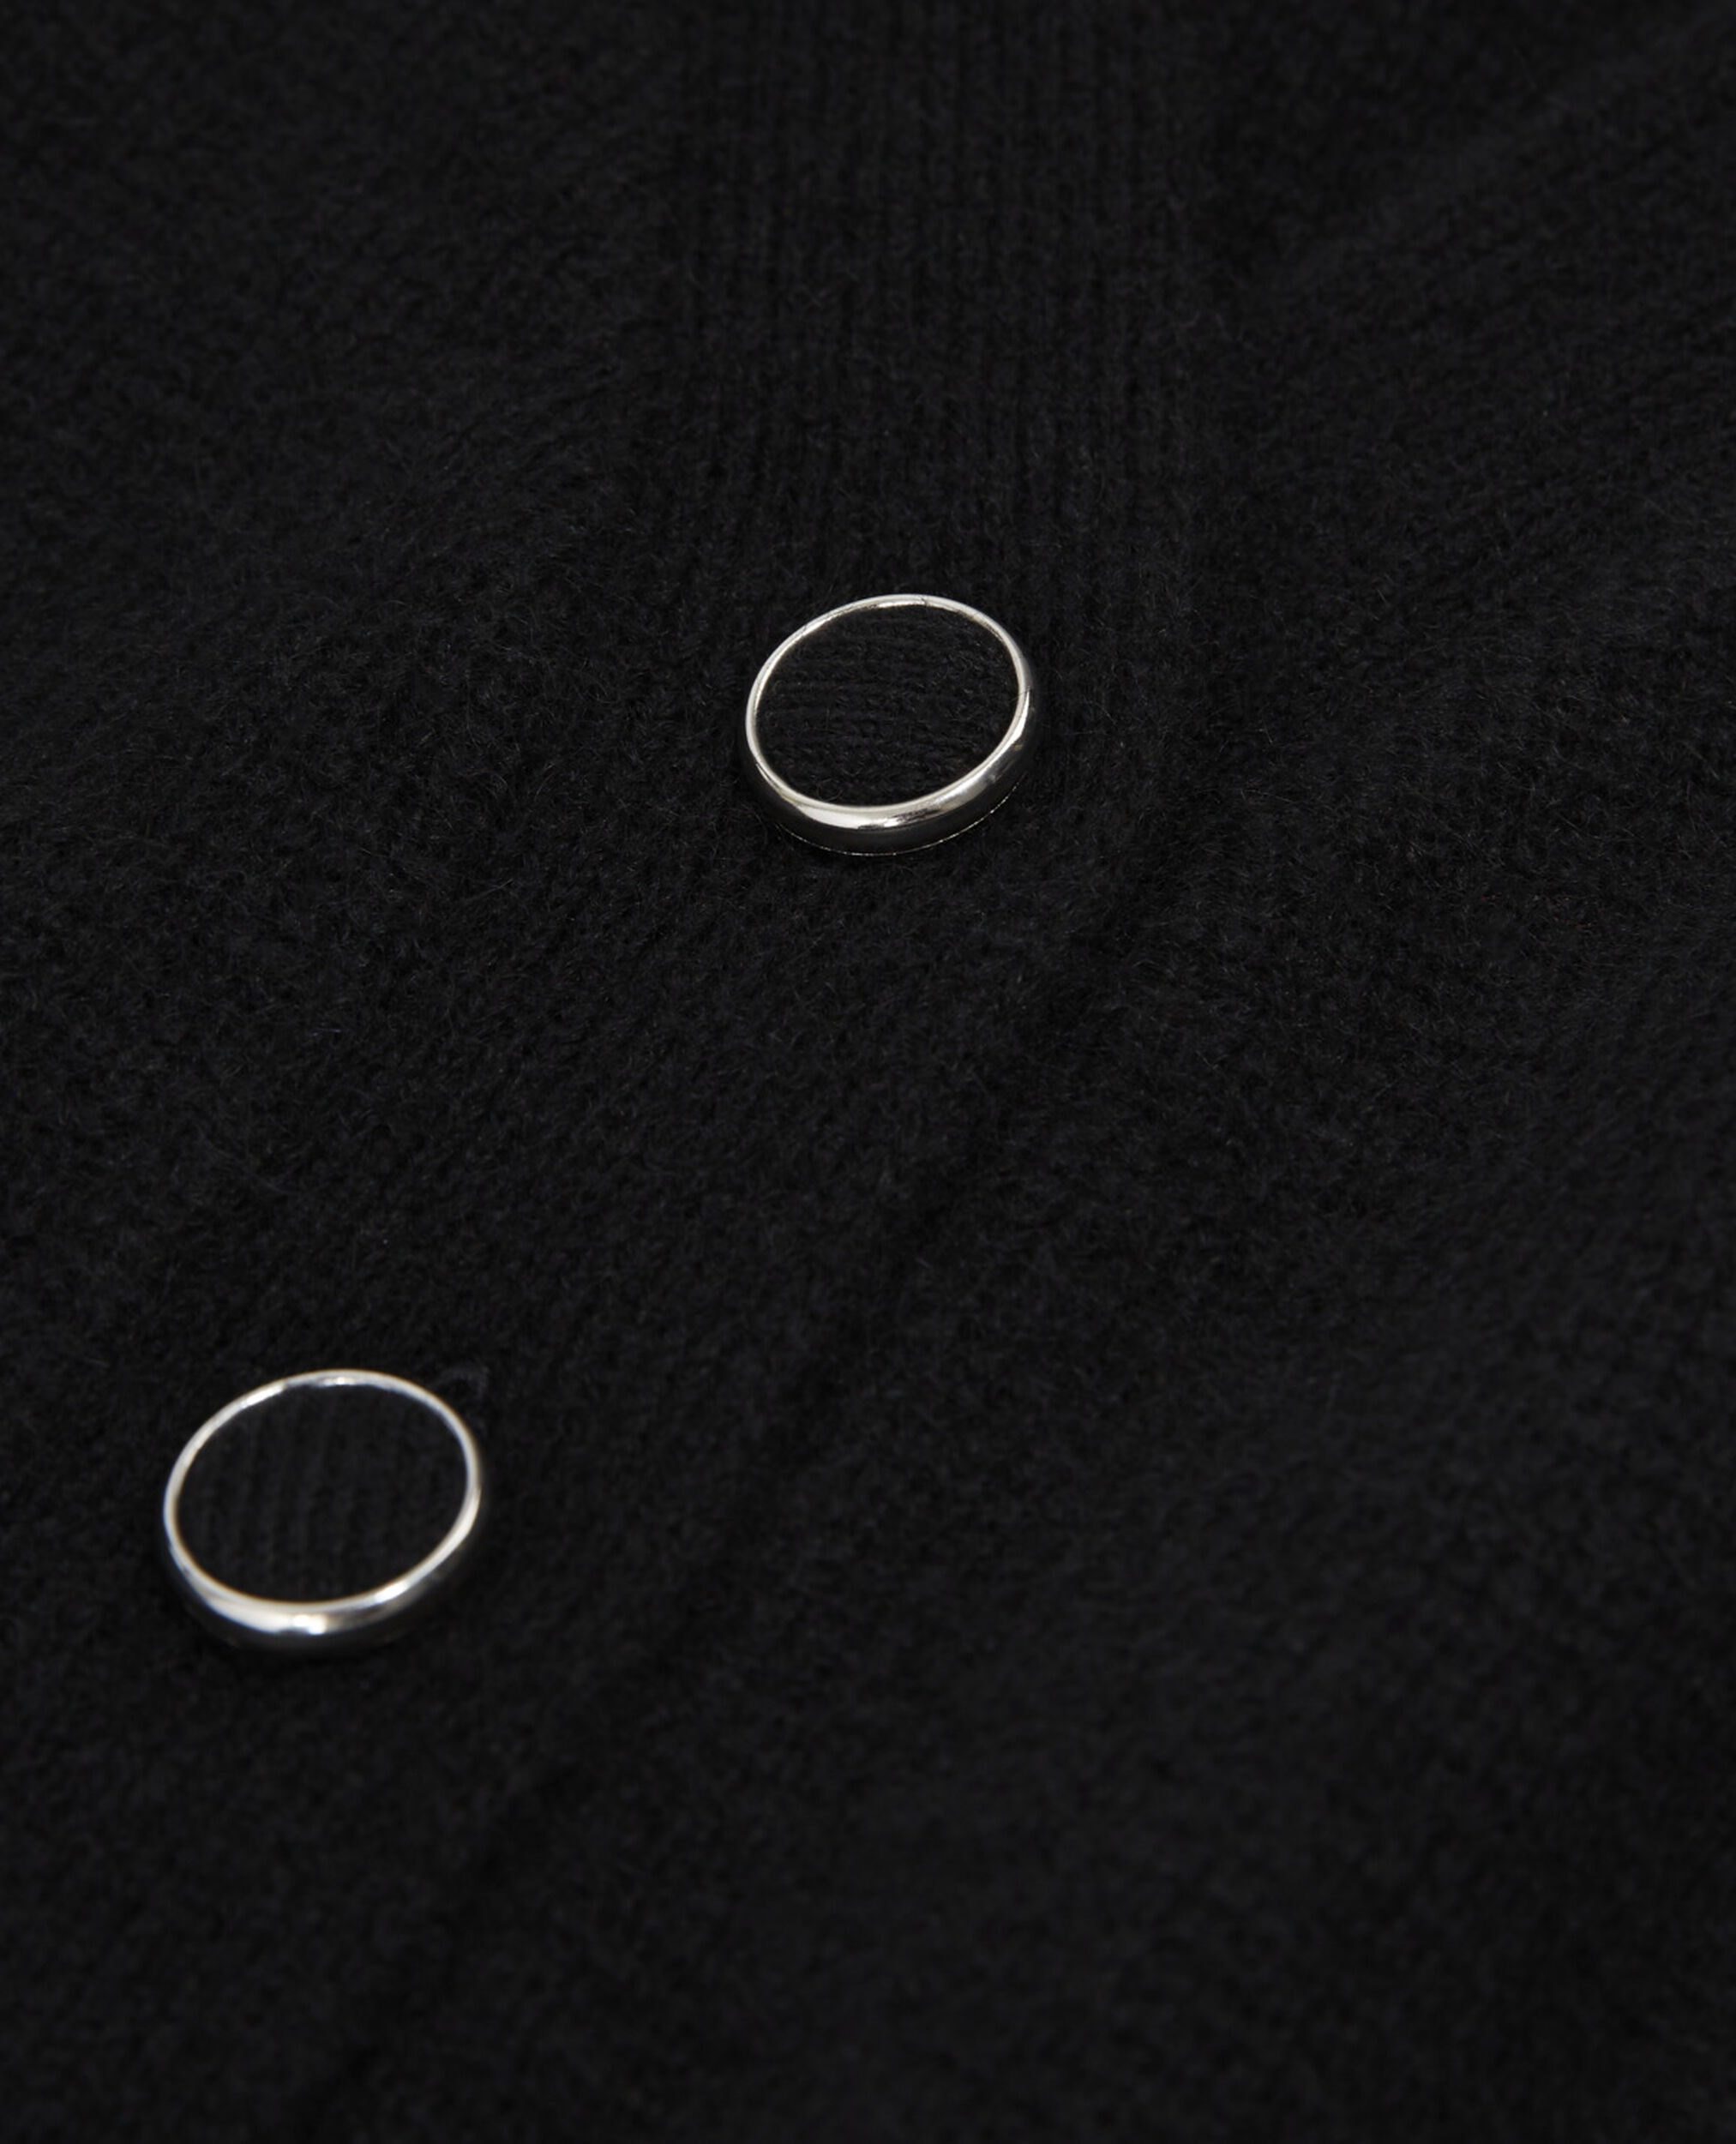 Buttoned alpaca black wool cardigan, BLACK, hi-res image number null